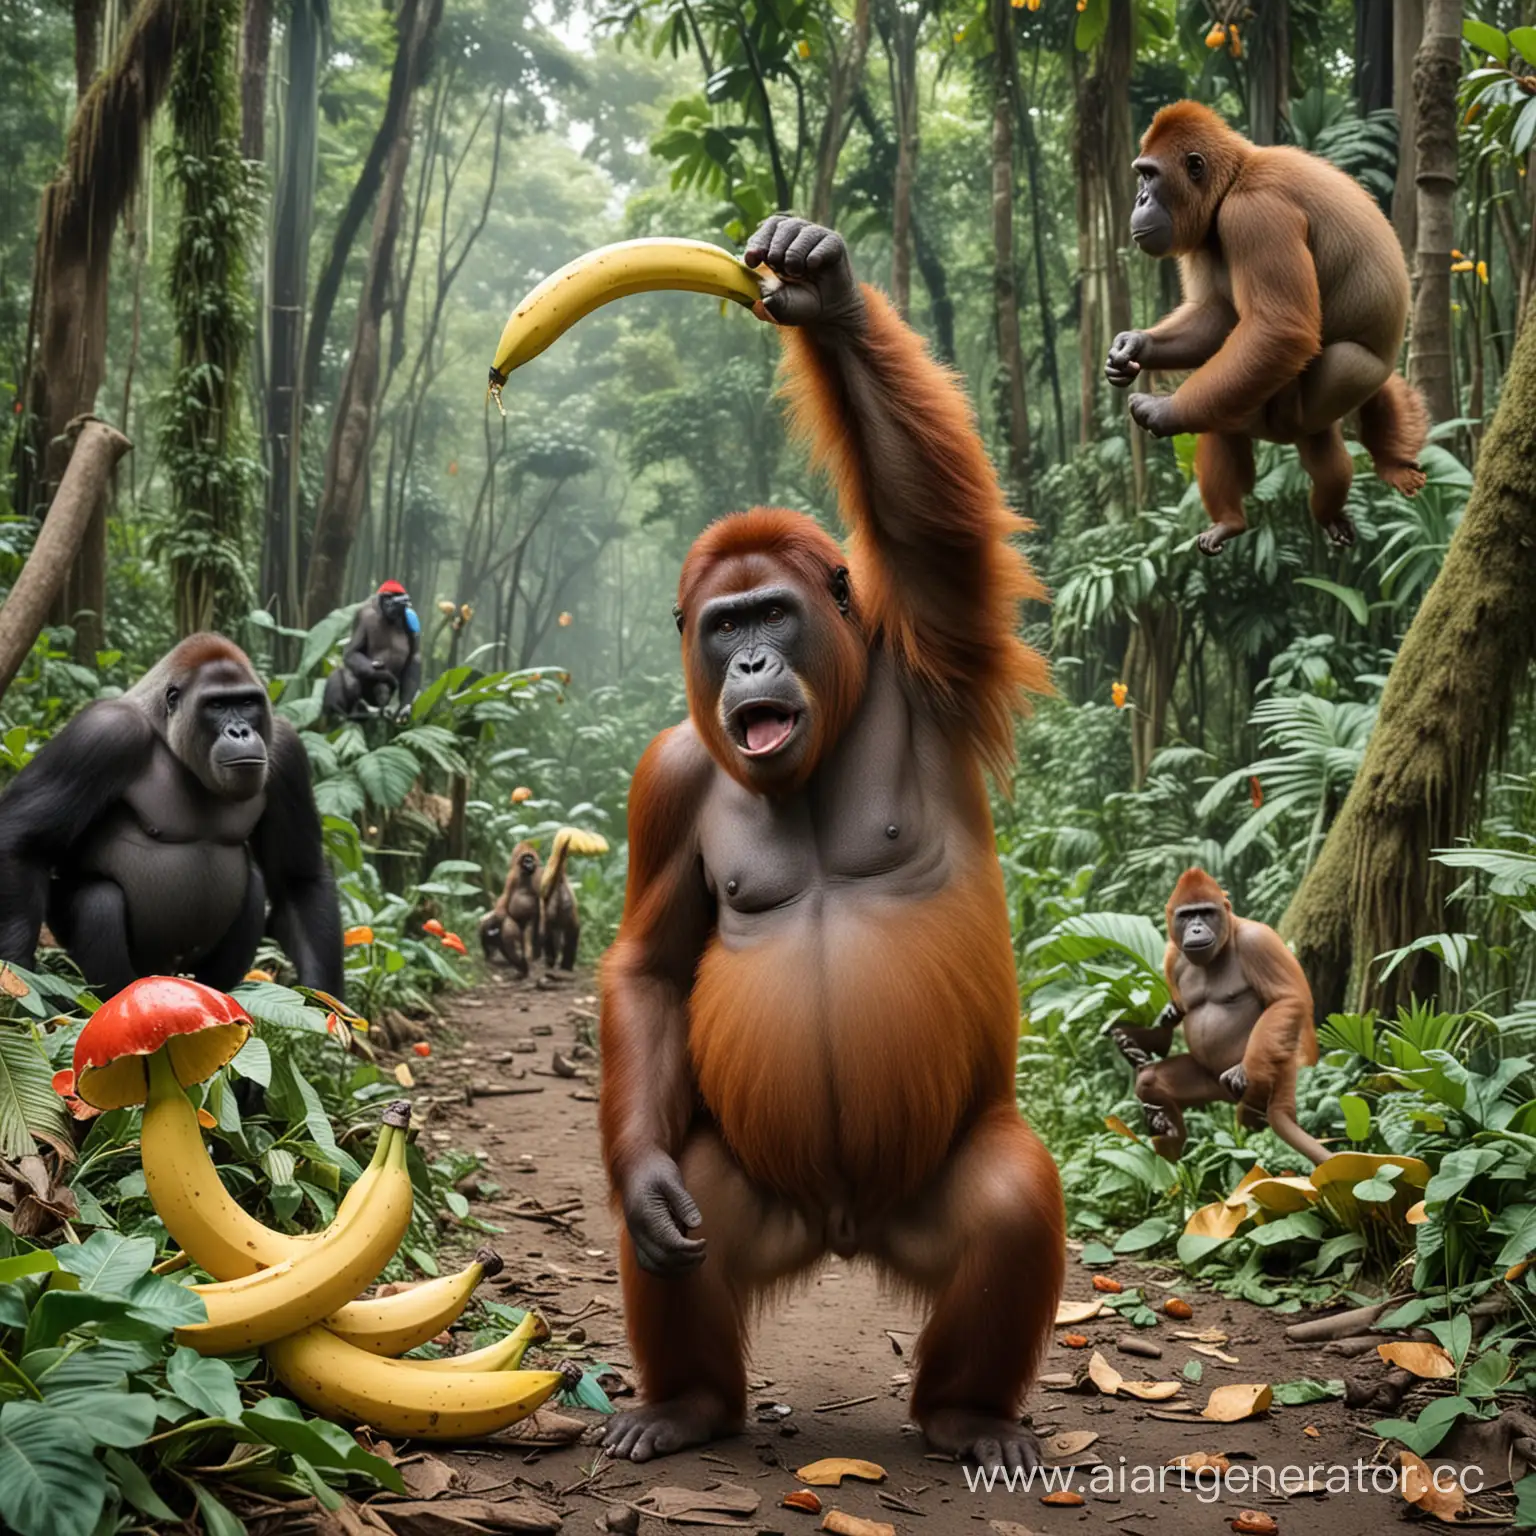 Primate-Chaos-Orangutan-Confronts-Gorilla-Amid-Banana-Mayhem